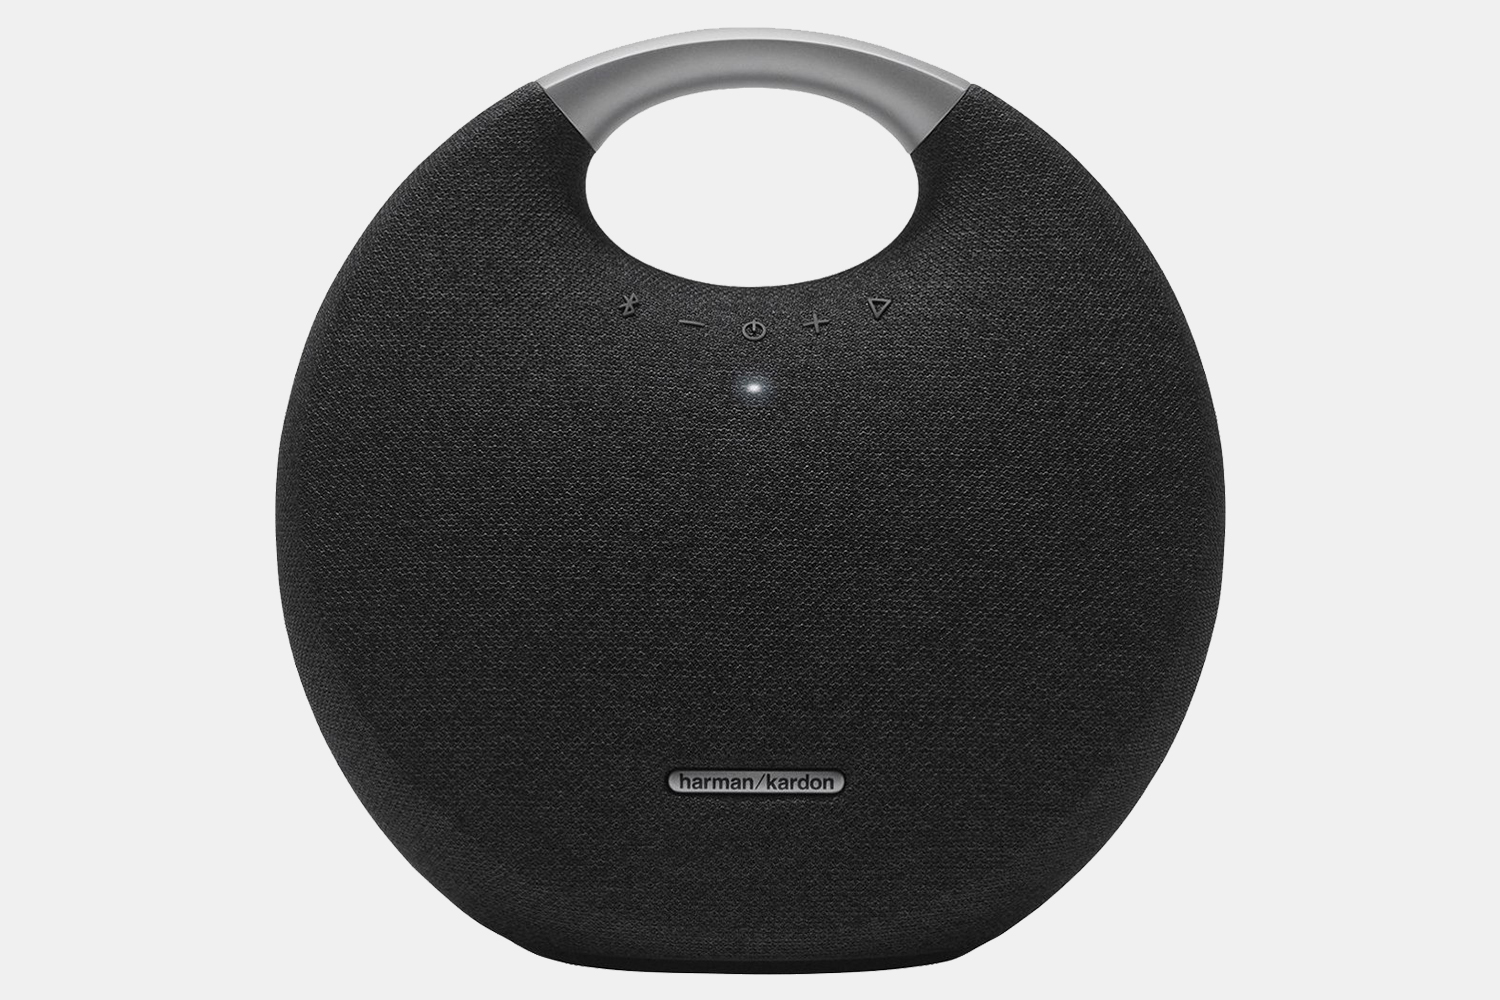 Harman/kardon Onyx Studio 5 Bluetooth Speaker